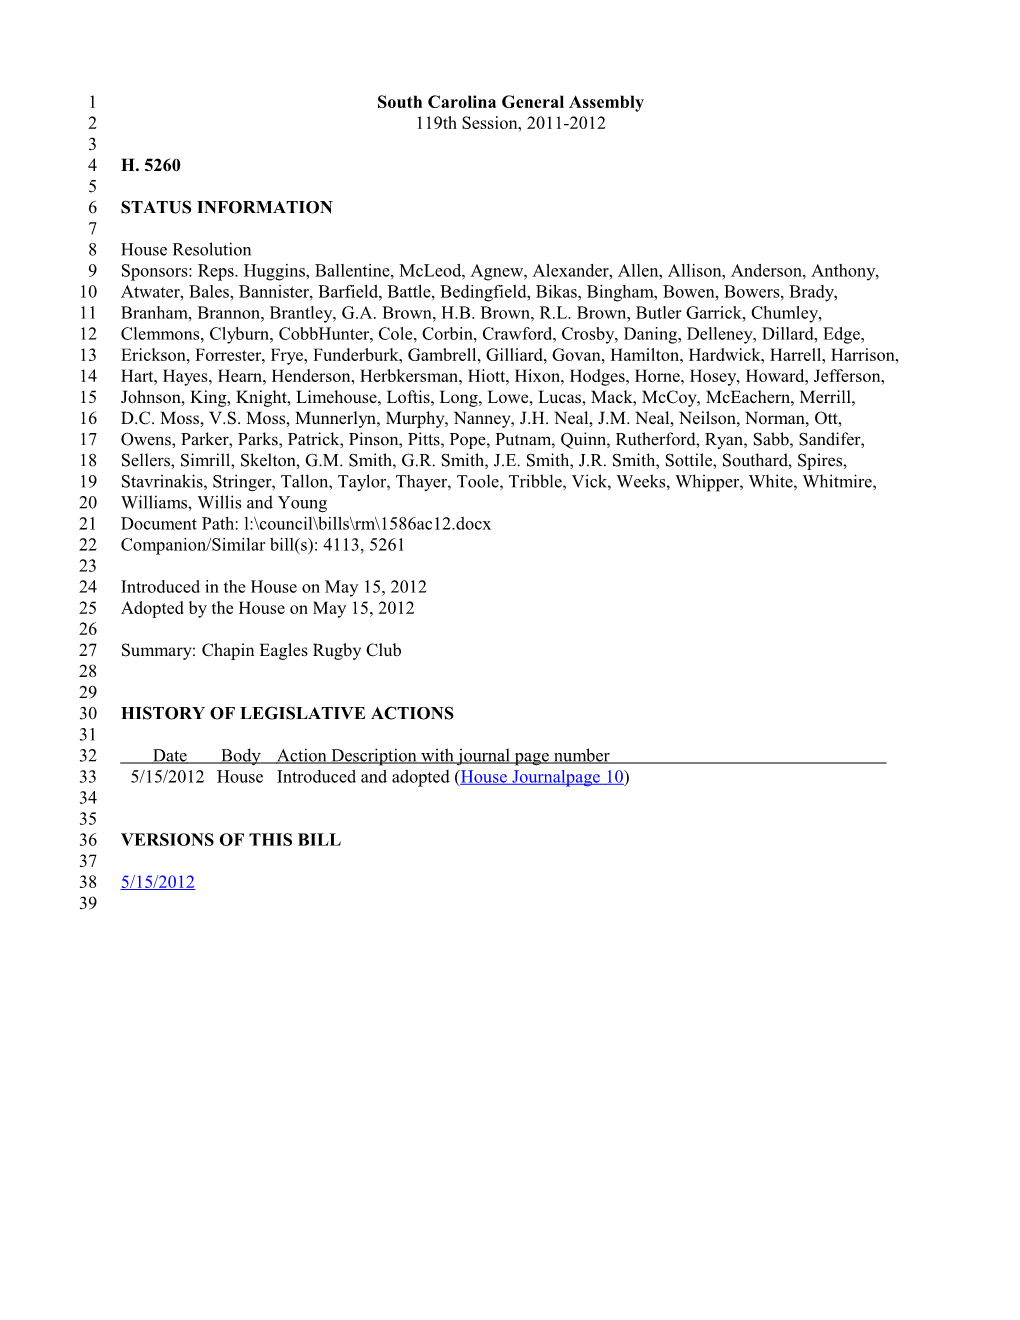 2011-2012 Bill 5260: Chapin Eagles Rugby Club - South Carolina Legislature Online